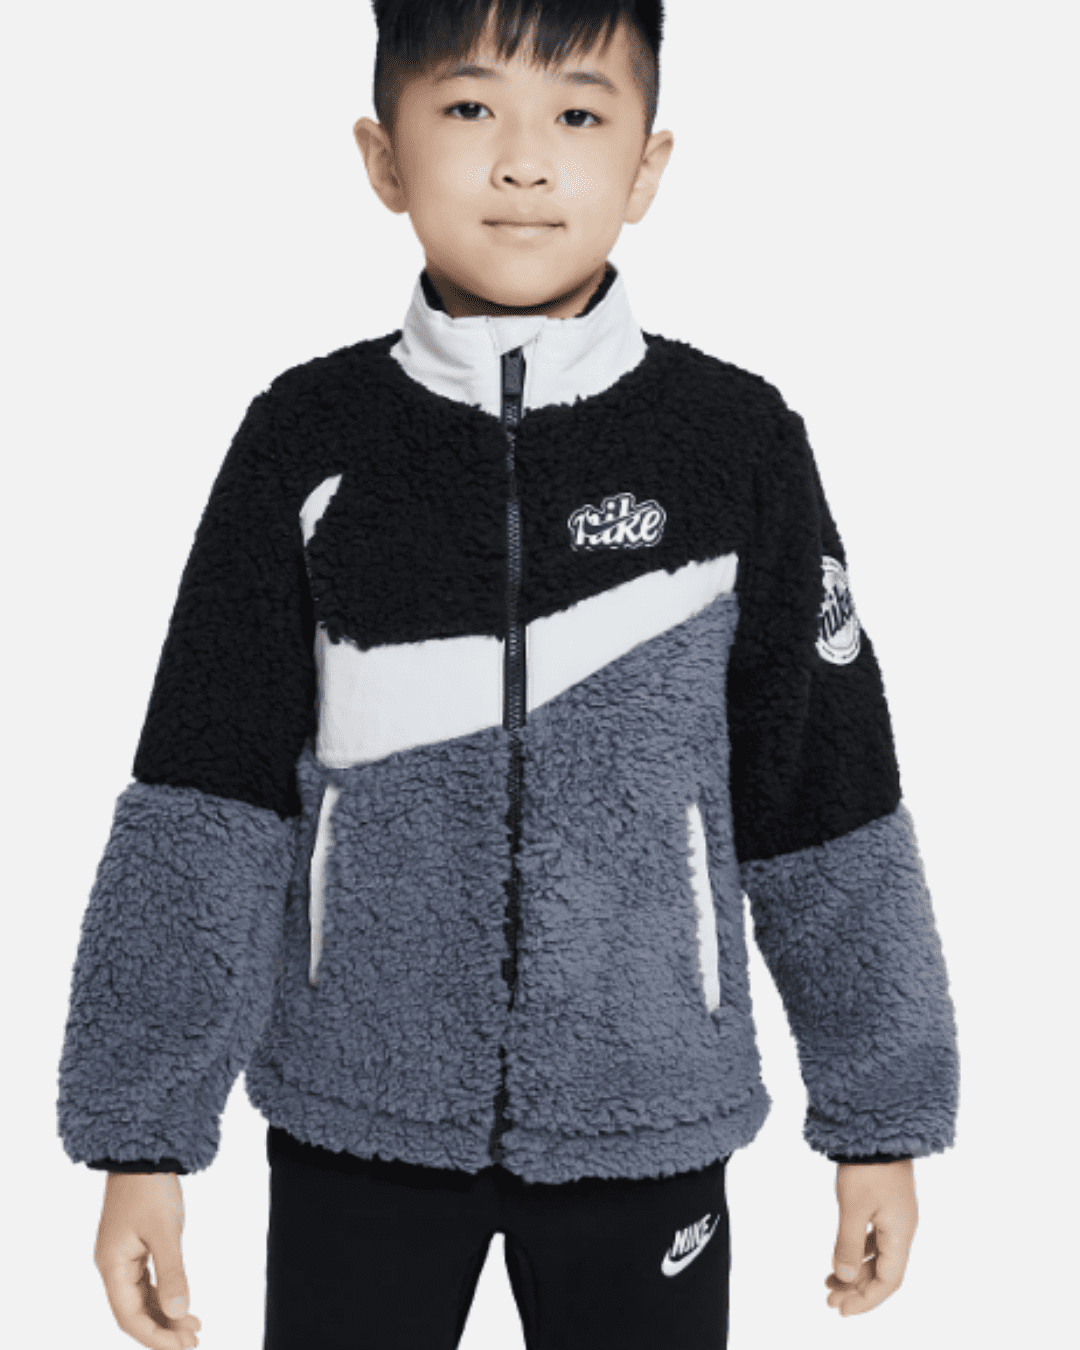 Nike Veste de sport pour enfants Kids Padded Jacket Core Just Do